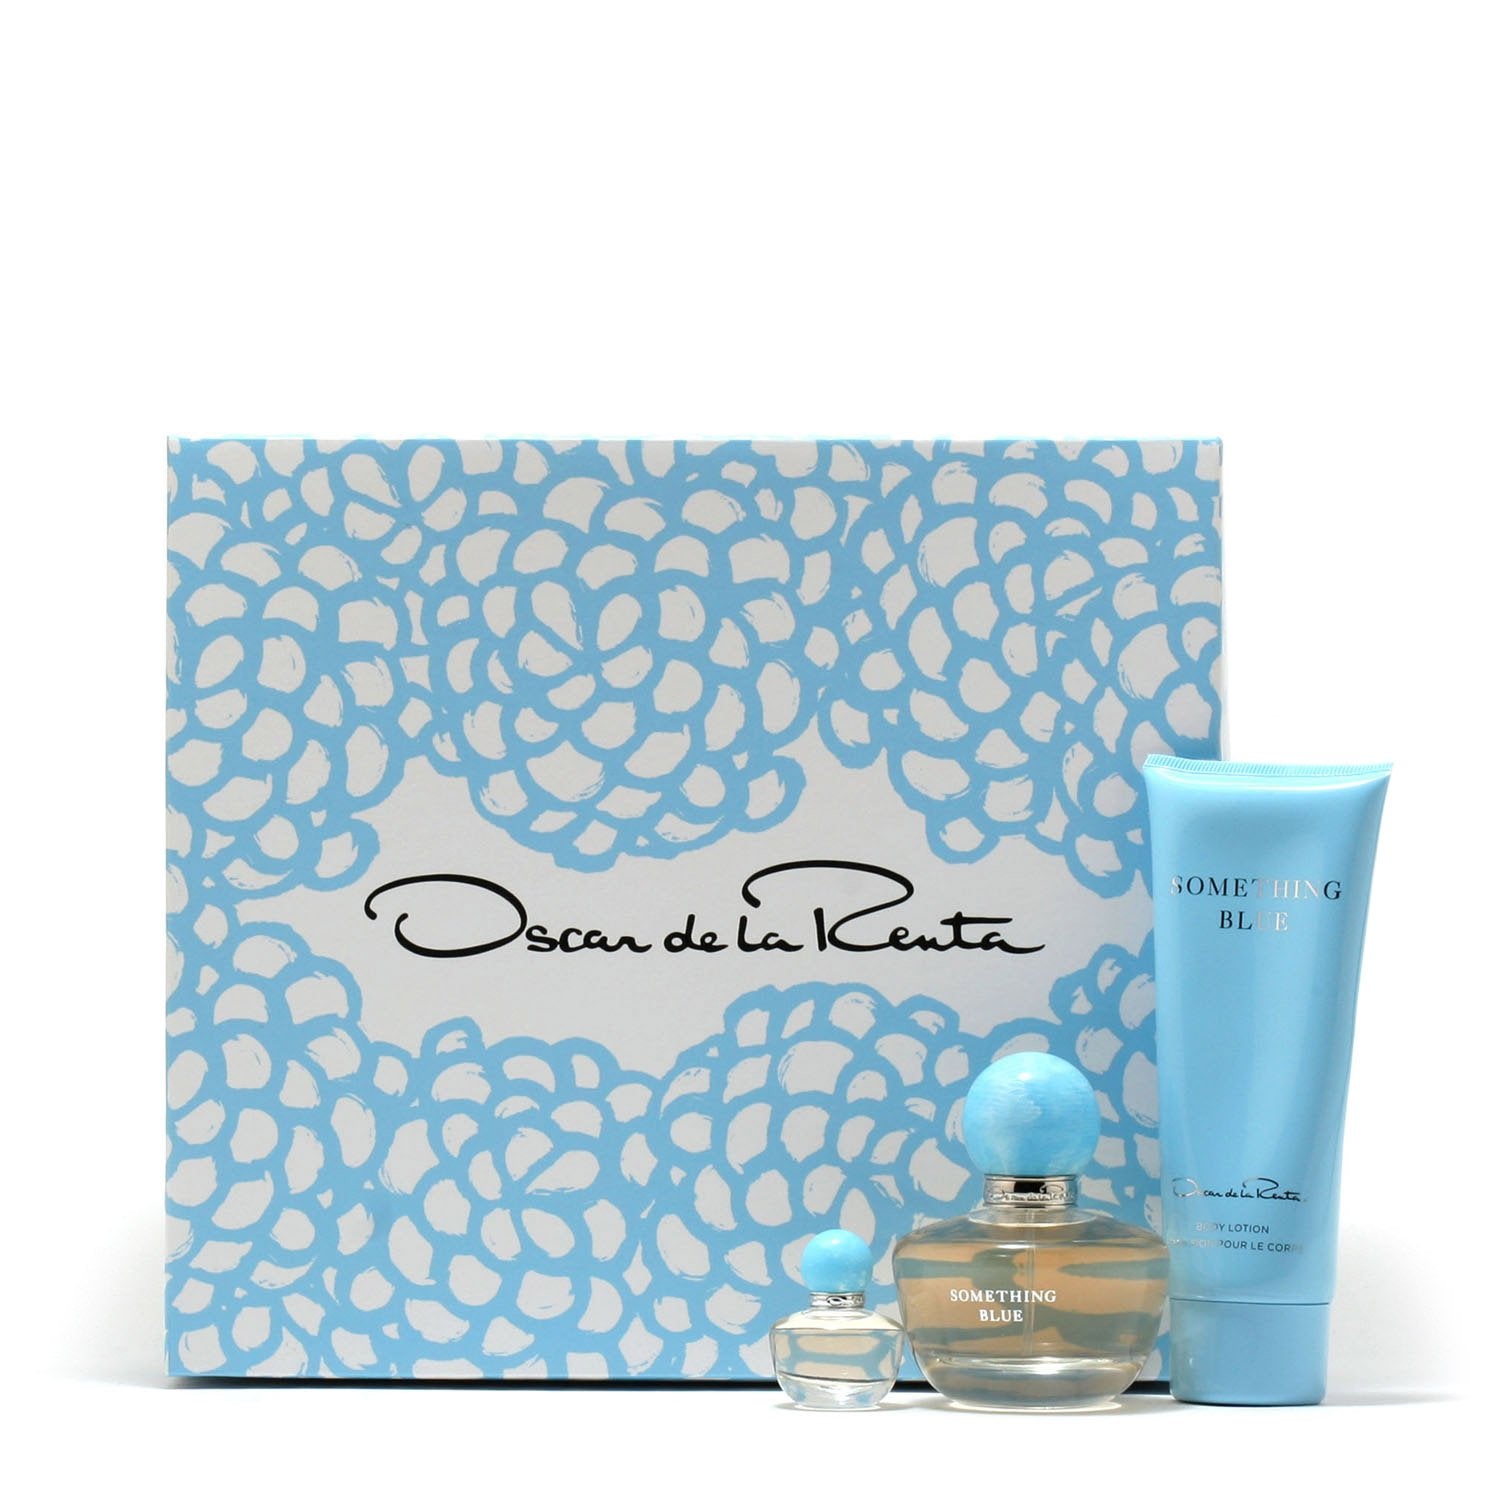 Perfume Sets - OSCAR DE LA RENTA SOMETHING BLUE FOR WOMEN - GIFT SET